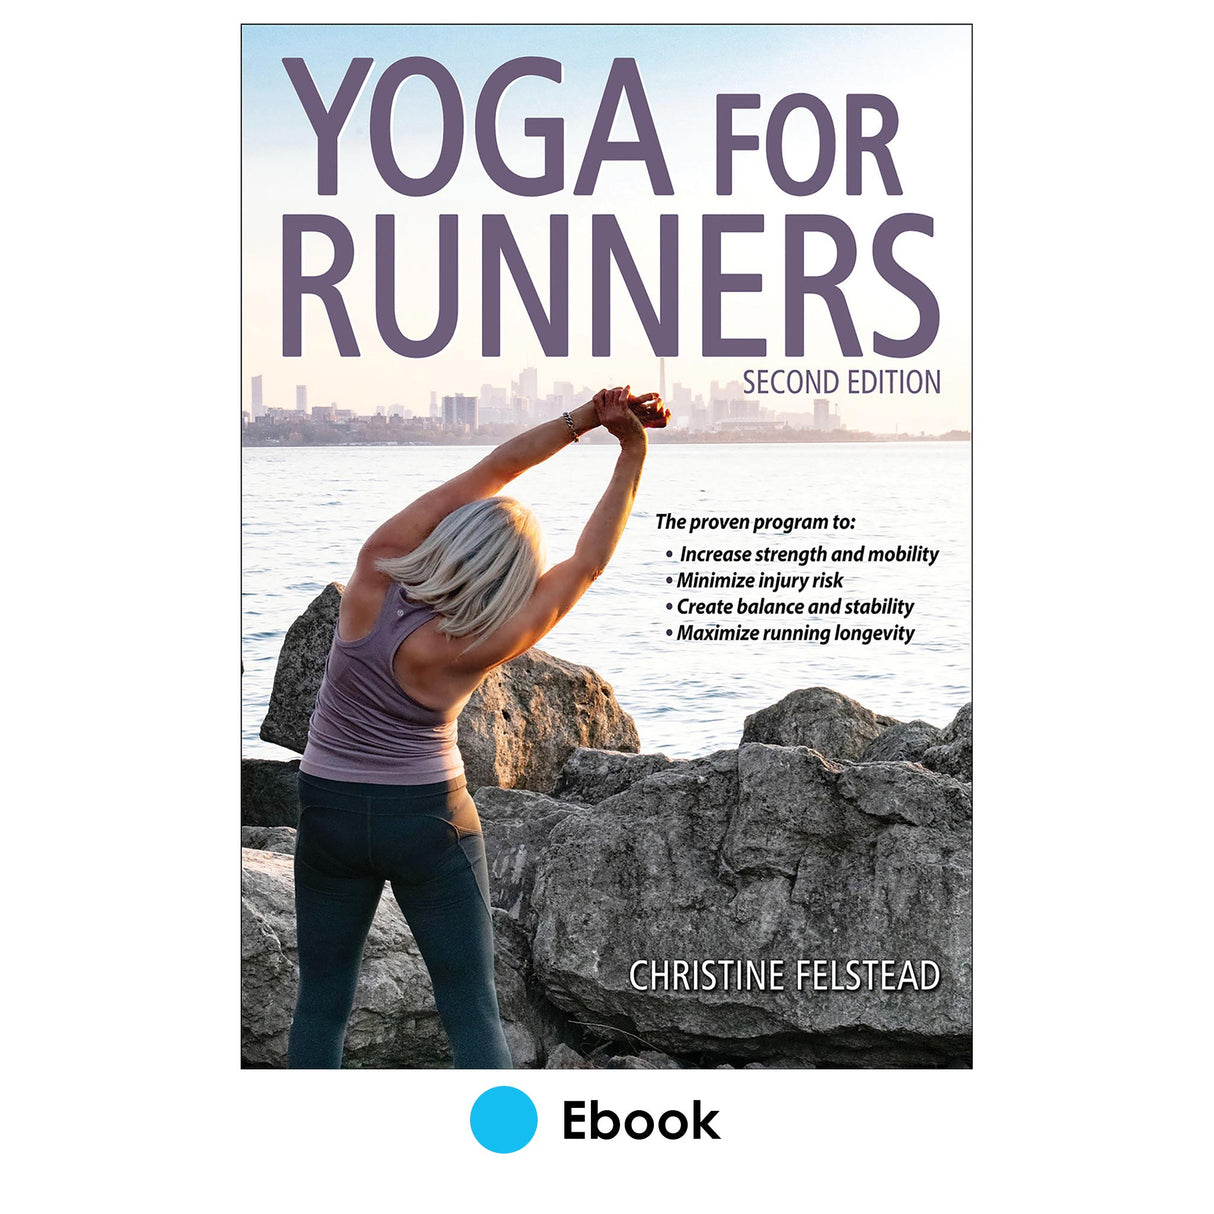 Yoga for Runners 2nd Edition epub